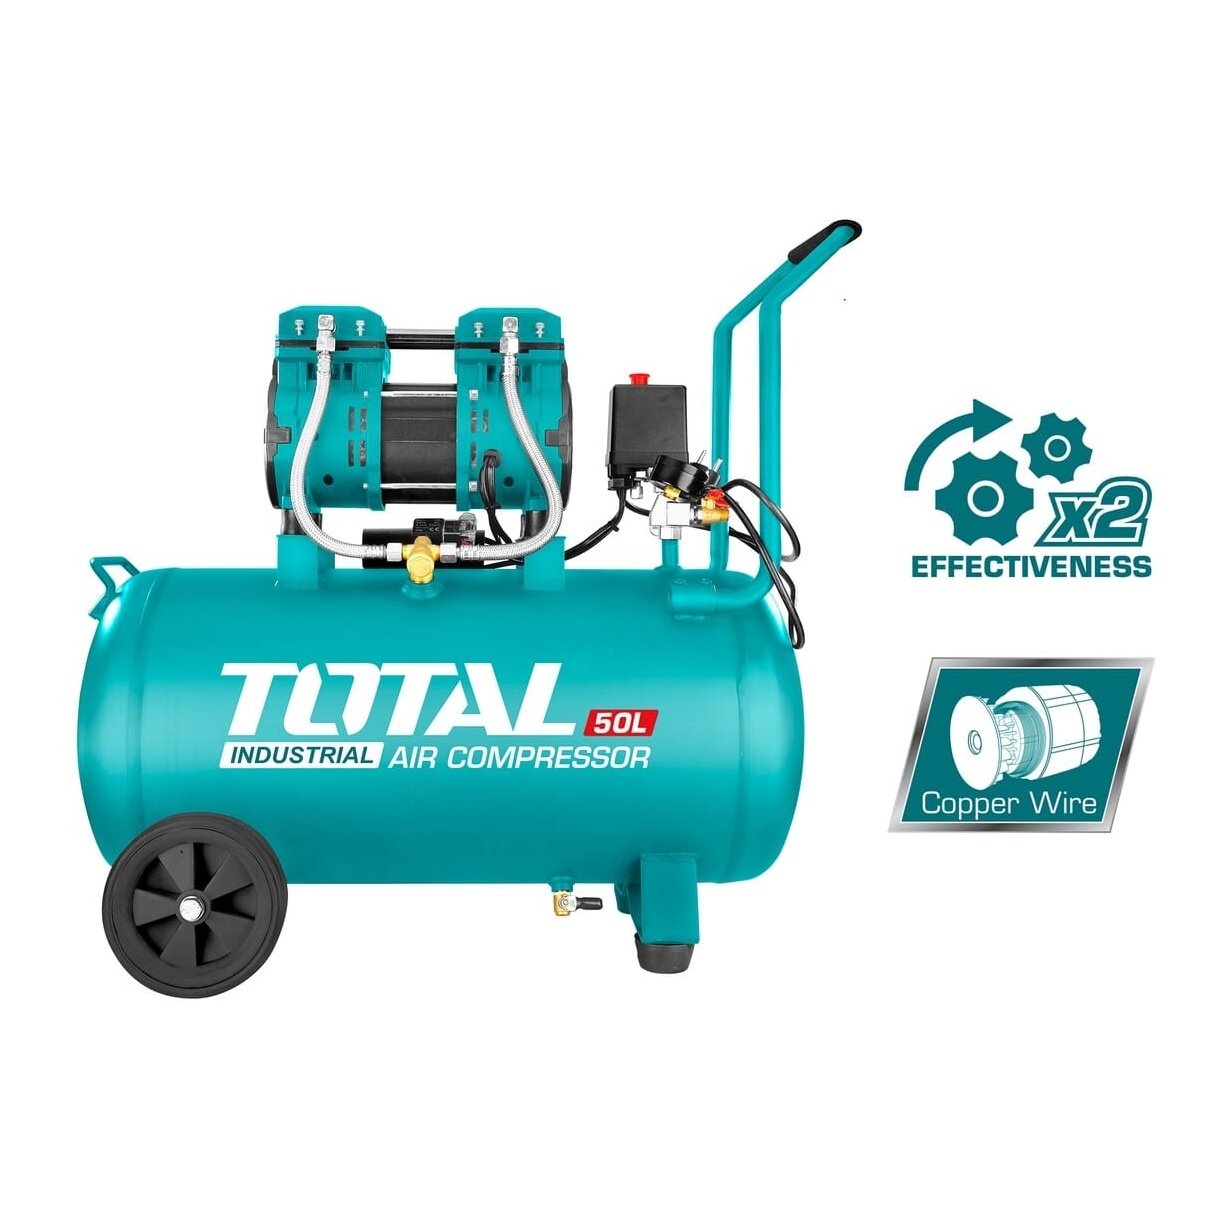 Total 50L Air Compressor 1200W - TCS1120508 | Supply Master | Accra, Ghana Compressor & Air Tool Accessories Buy Tools hardware Building materials